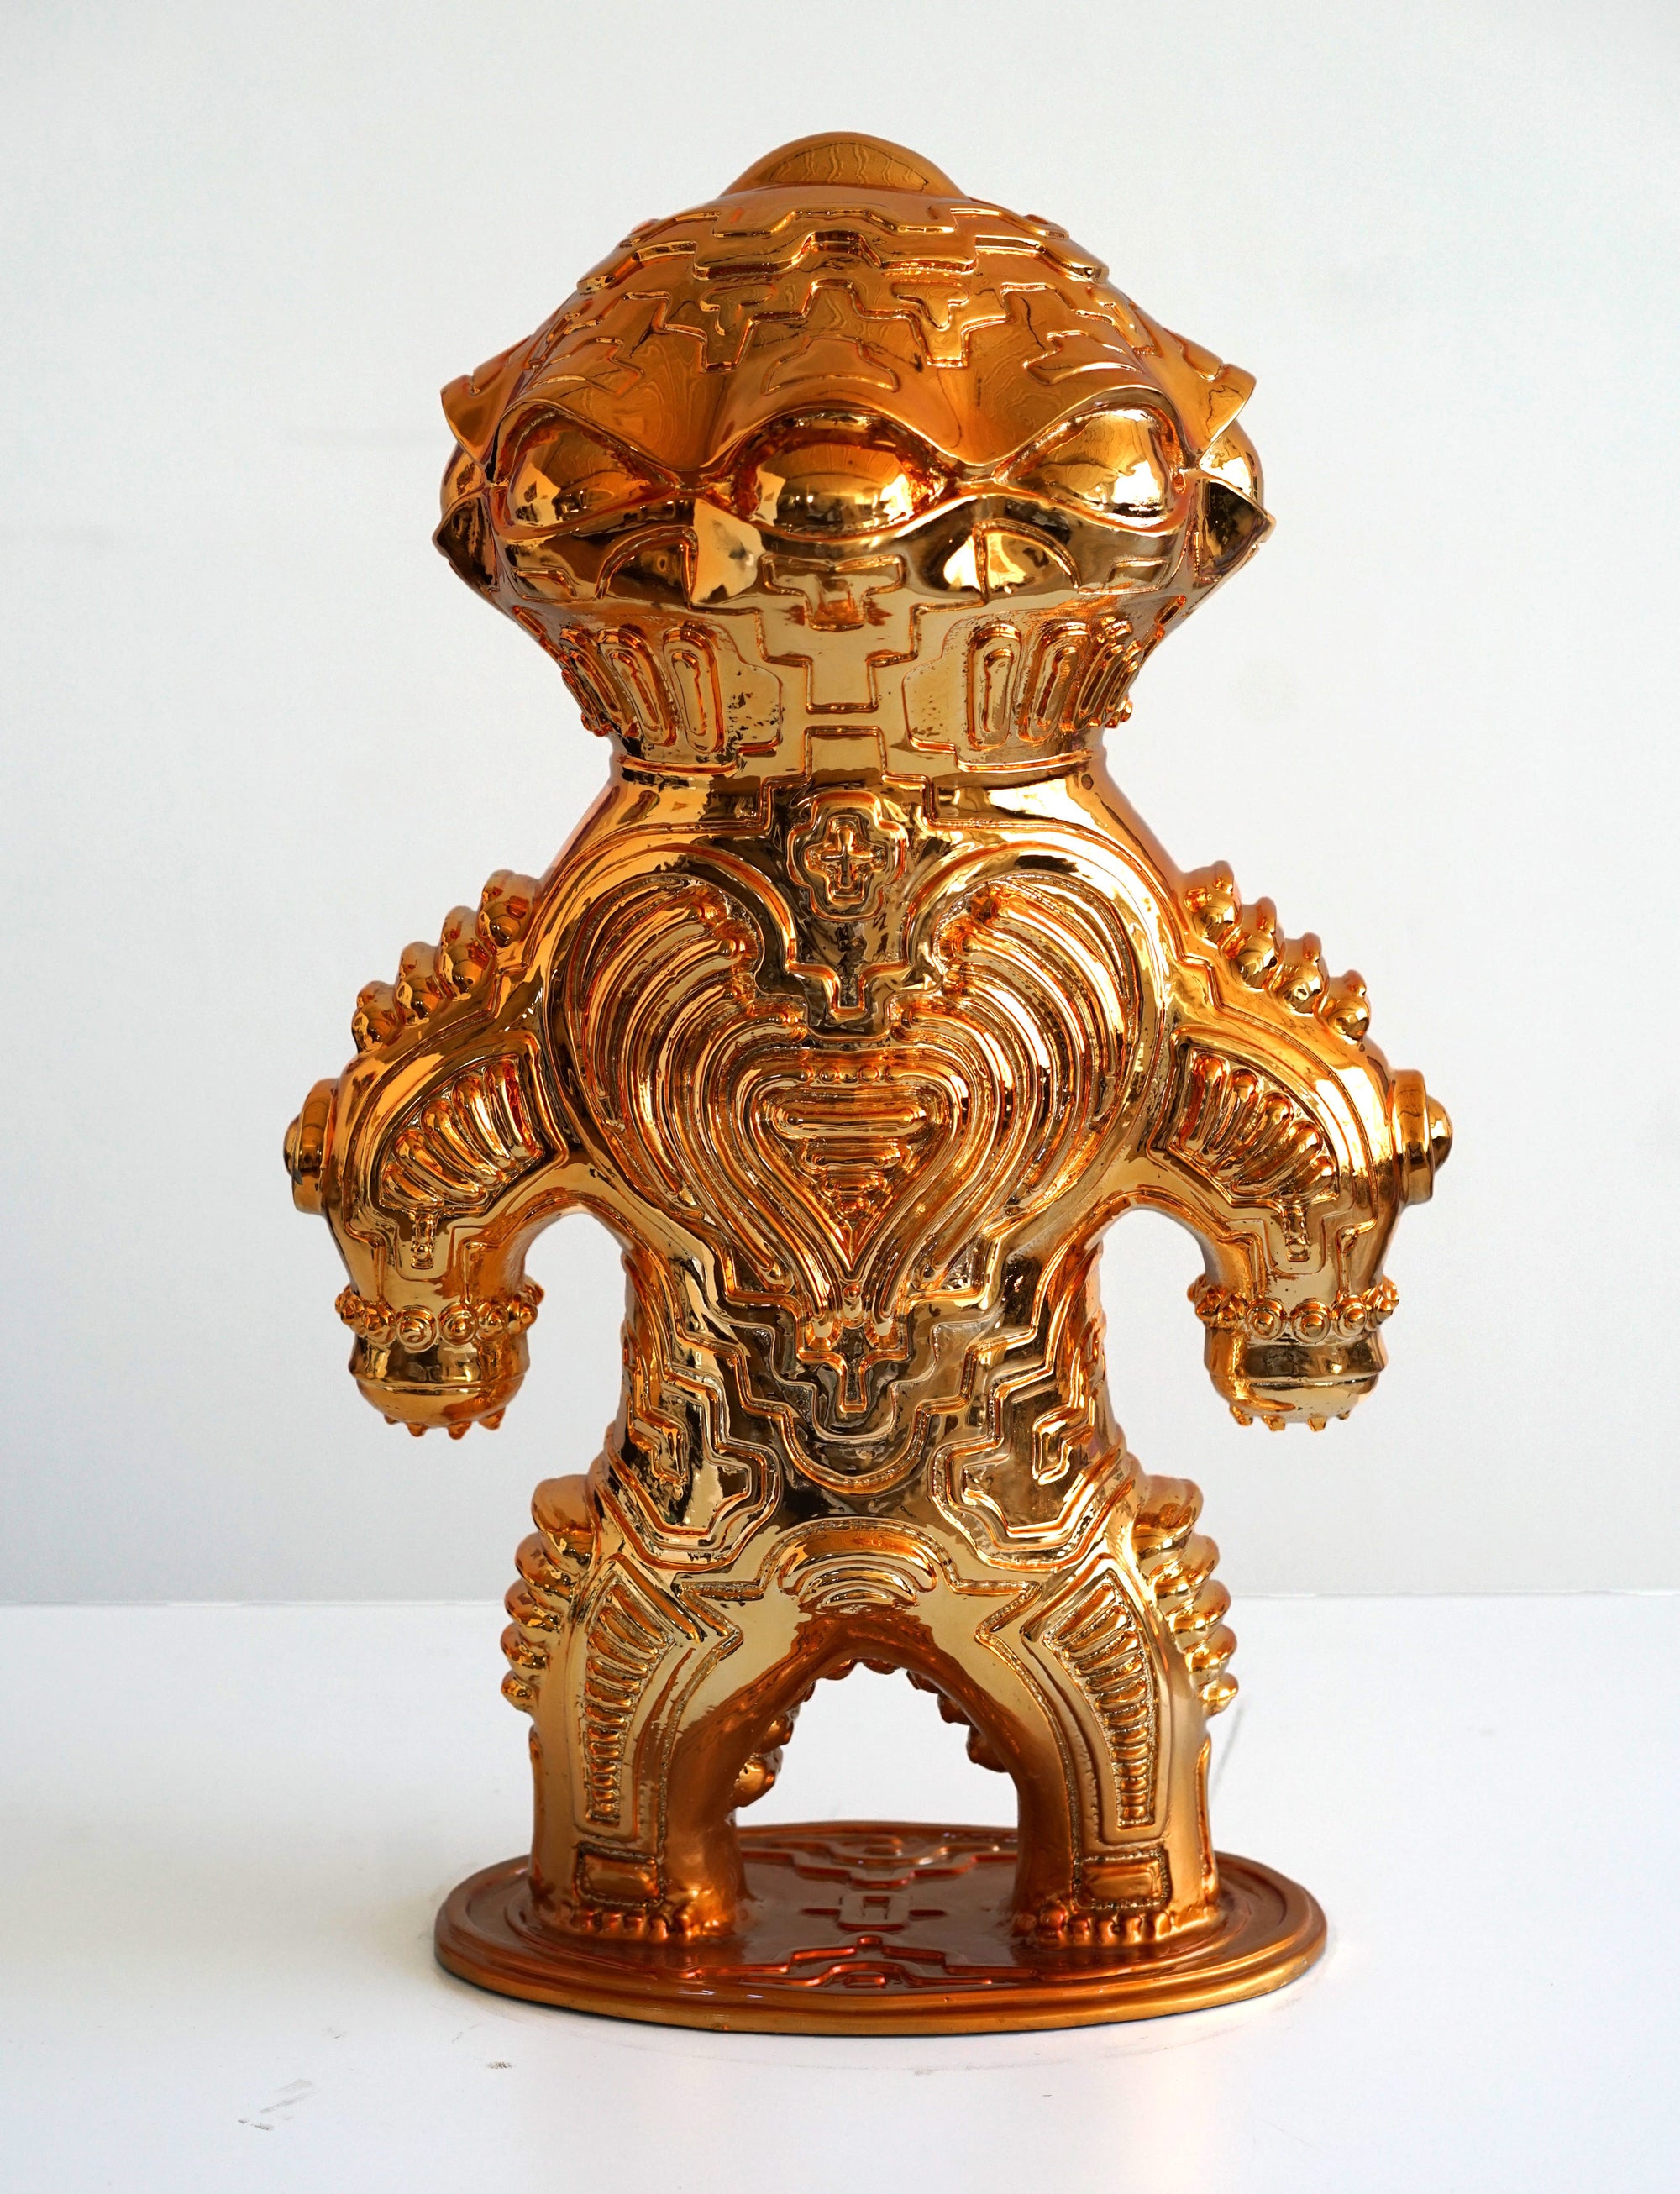 Dogu Gold Chrome Plated Sculpture by Ben Ridgway